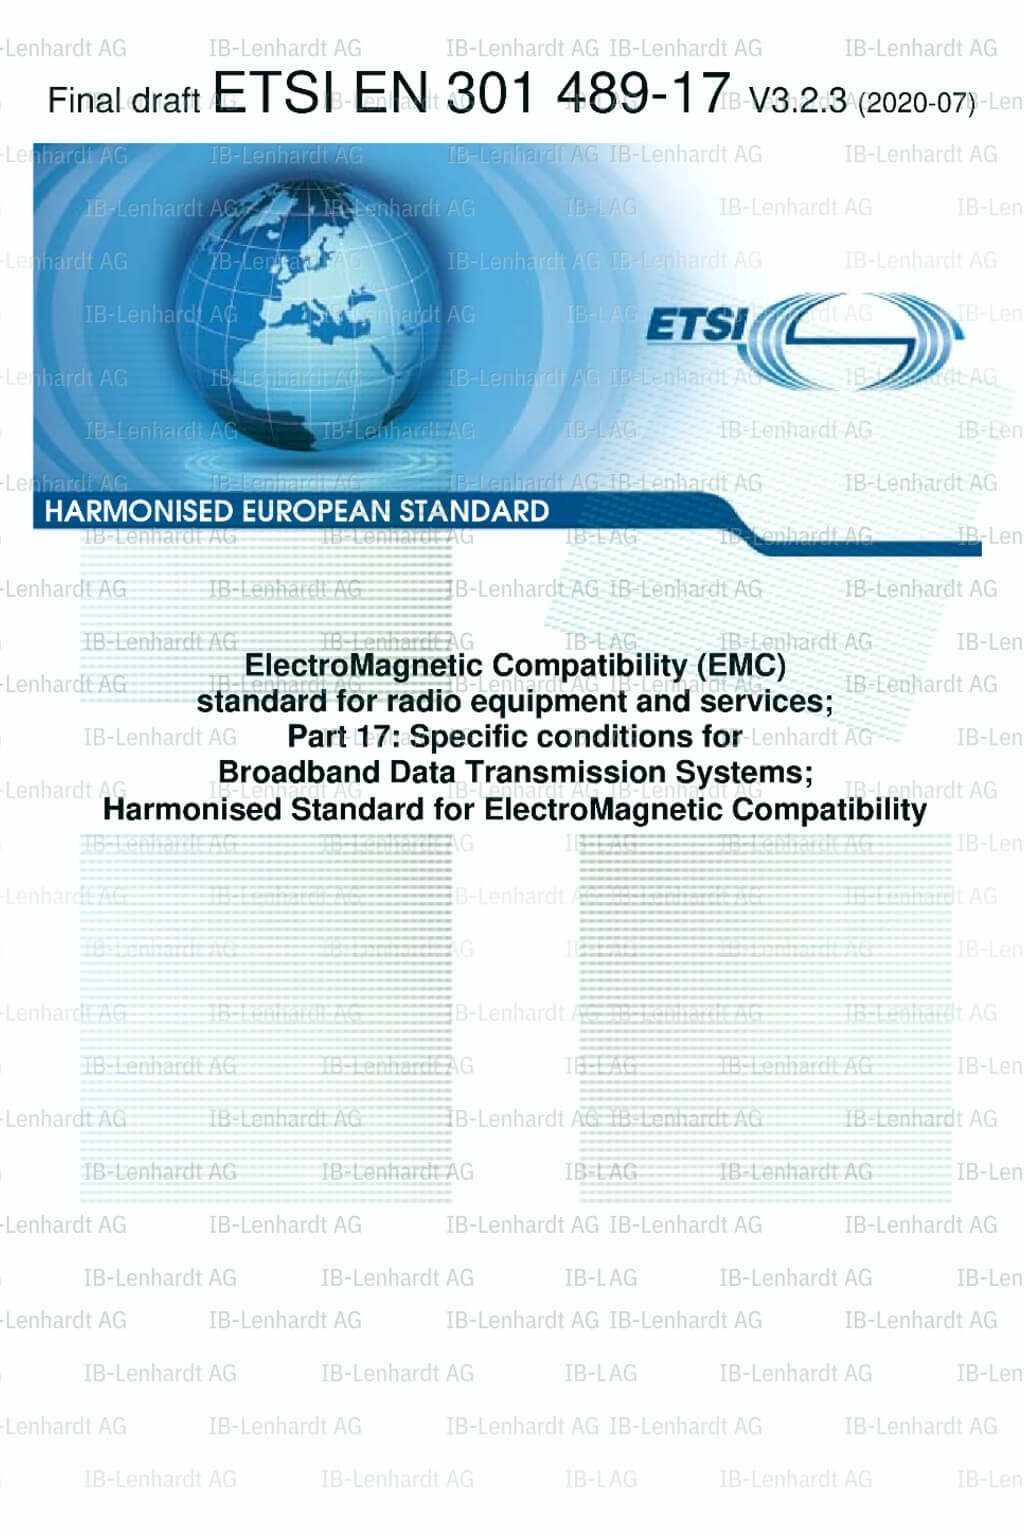 ETSI EN 301 489-17 V3.2.3 (Final Draft)